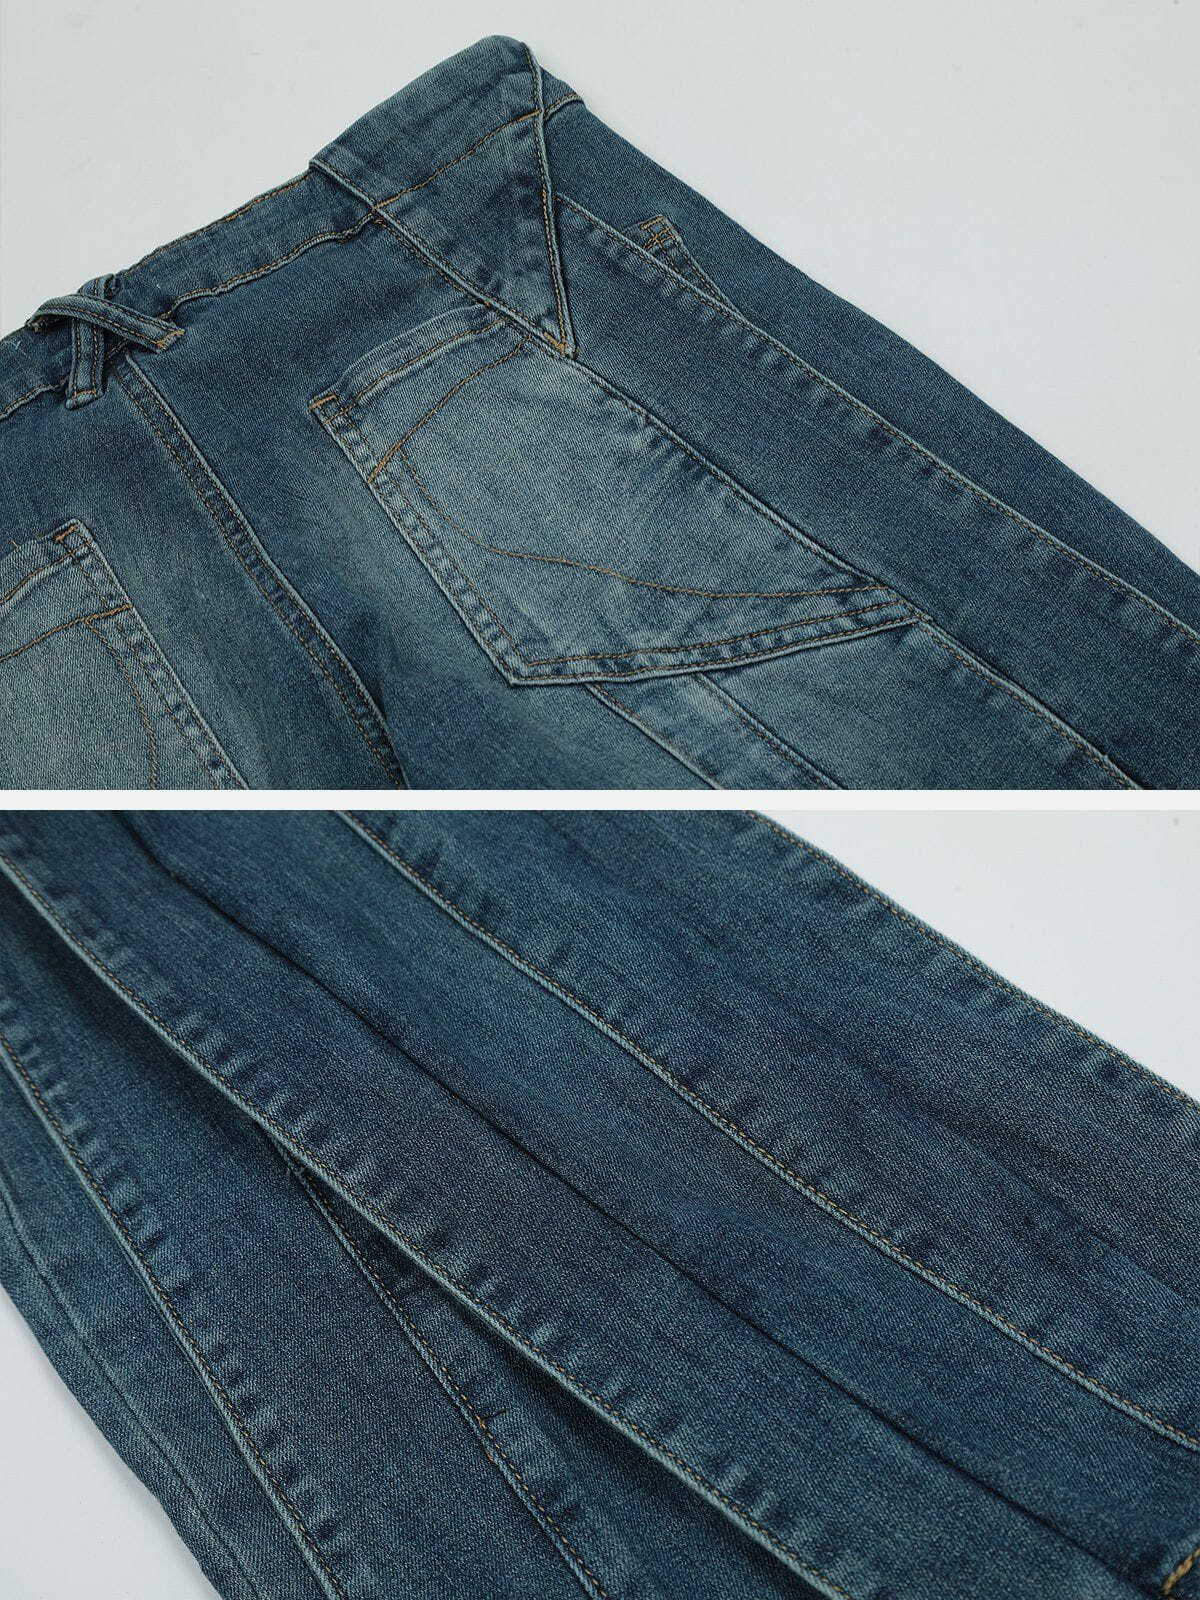 deconstructed split jeans edgy streetwear staple 8690